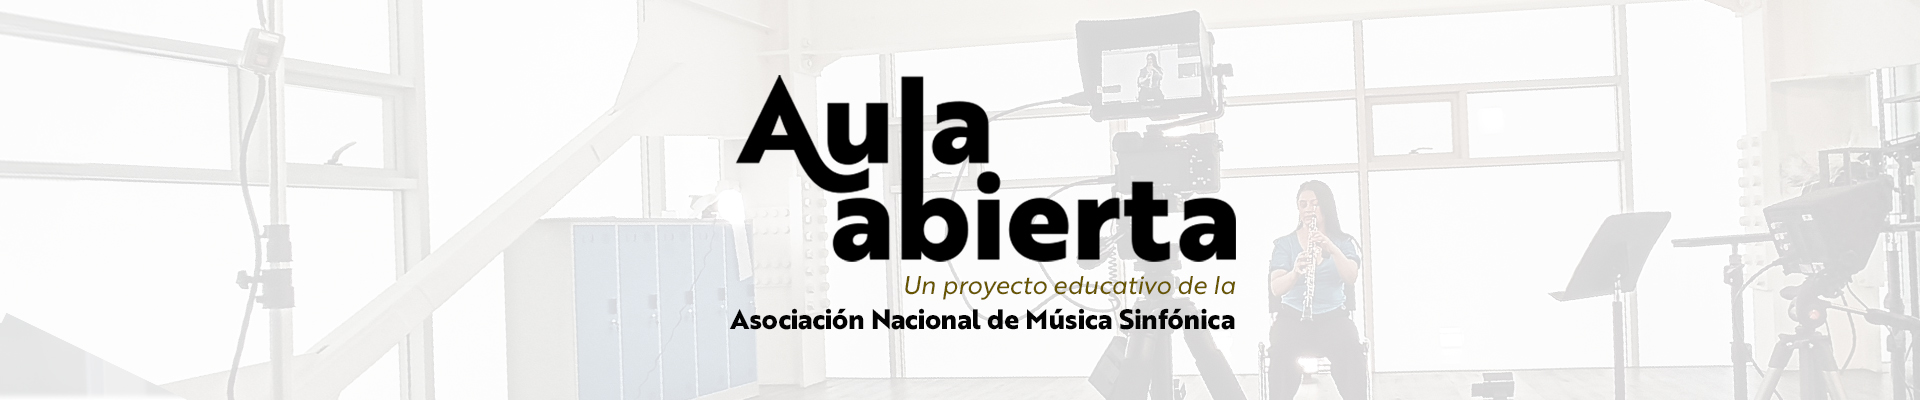 #aulaabierta #educación #sinfónica #música